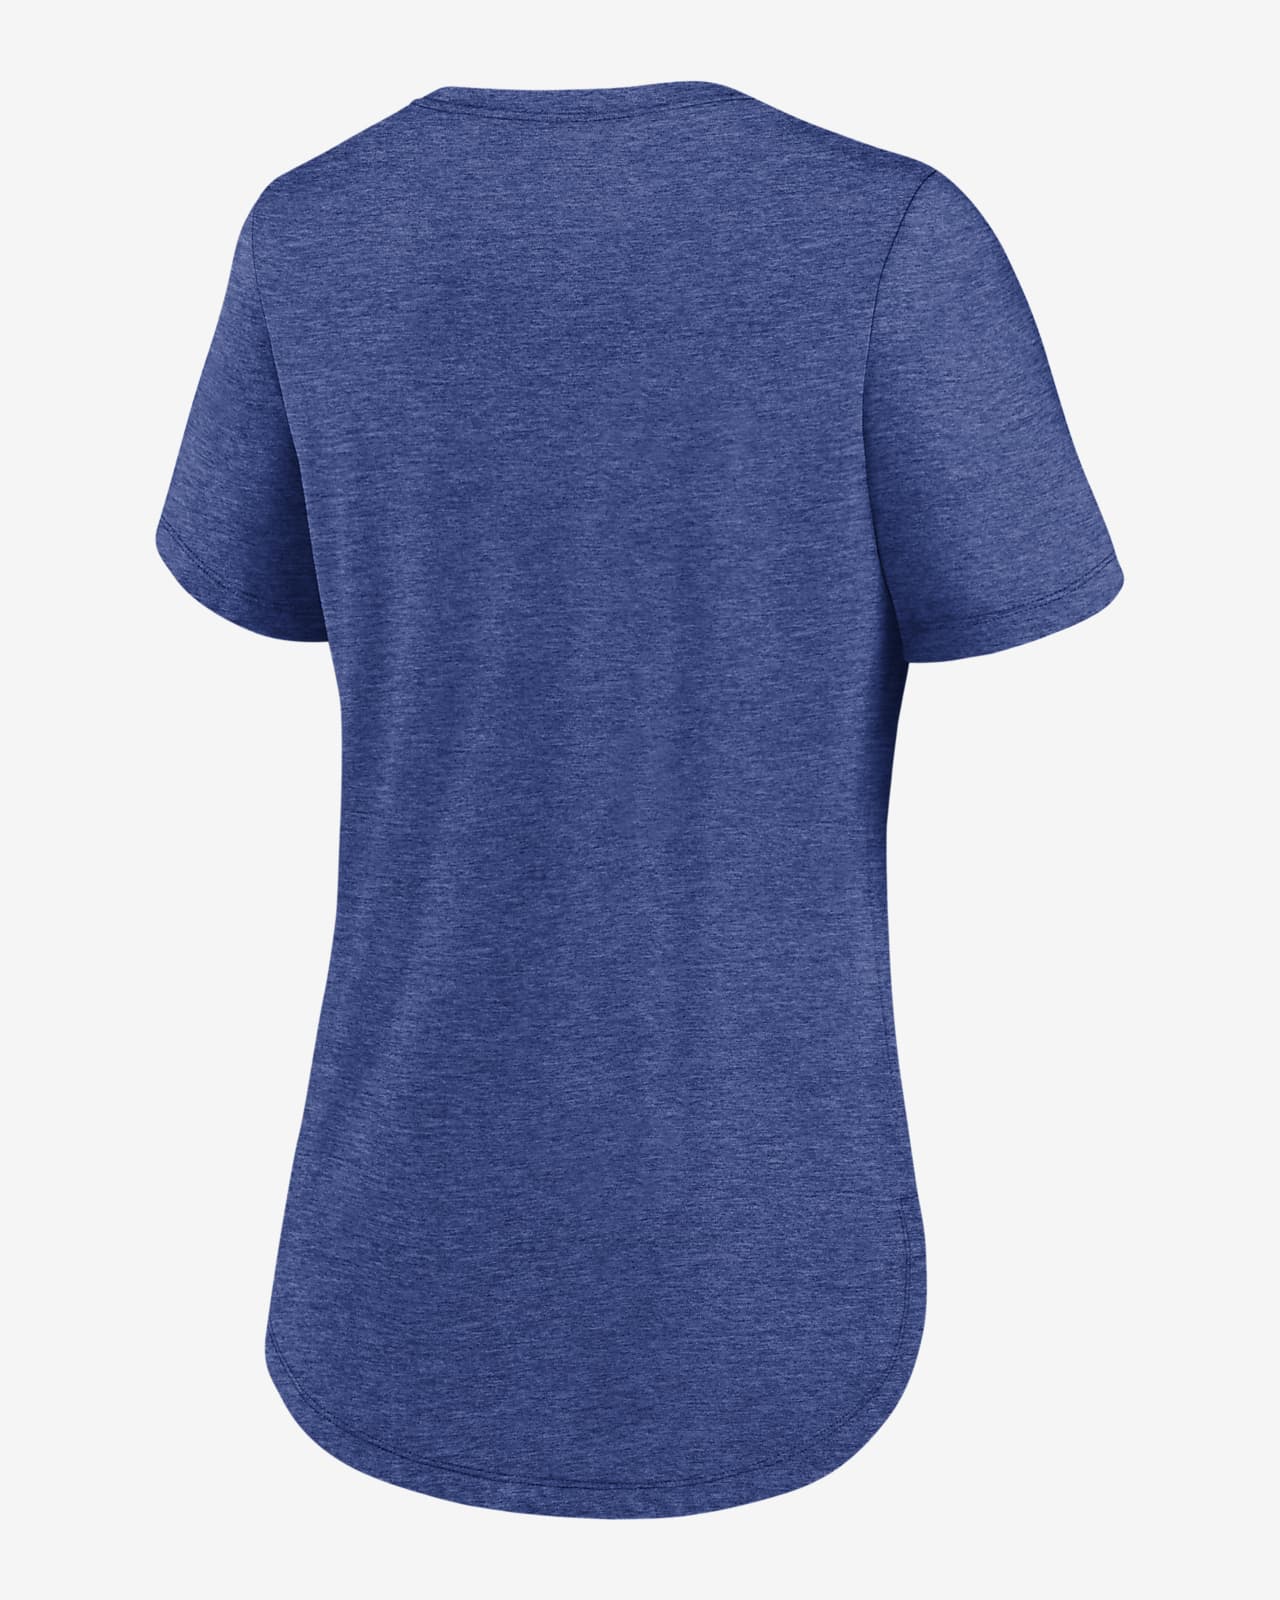 Nike Fashion (NFL New England Patriots) Women's T-Shirt. Nike.com